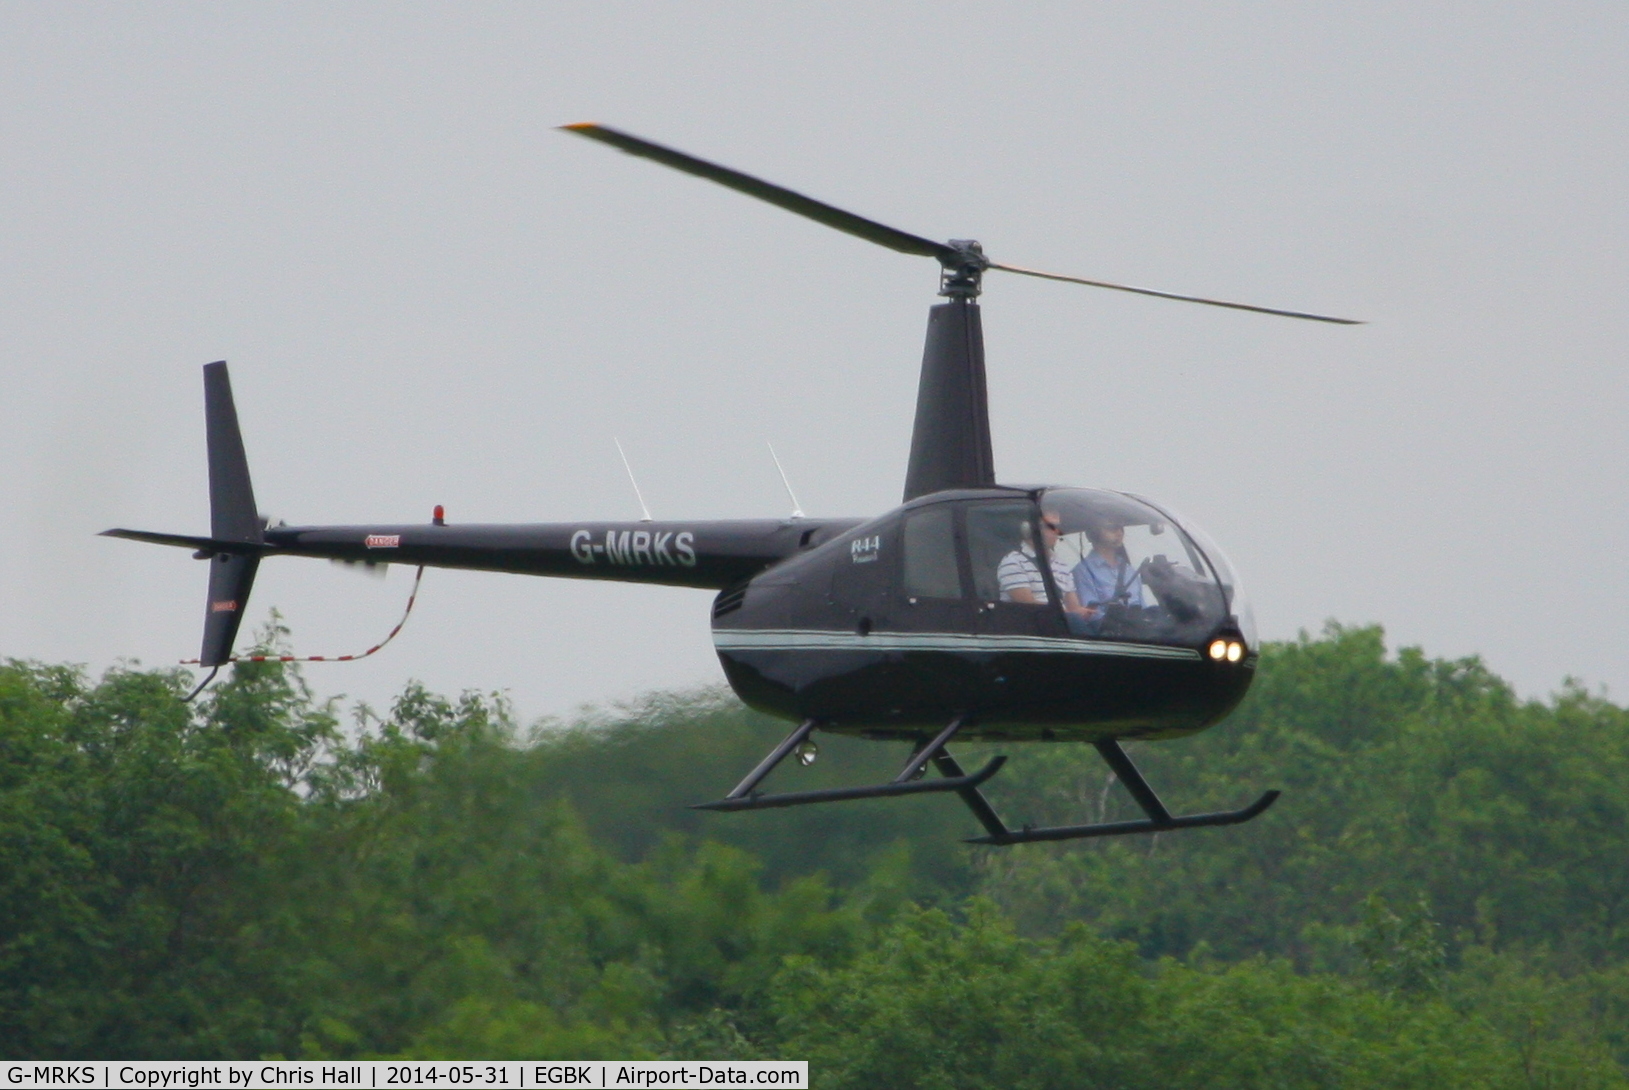 G-MRKS, 2000 Robinson R44 C/N 0771, at AeroExpo 2014